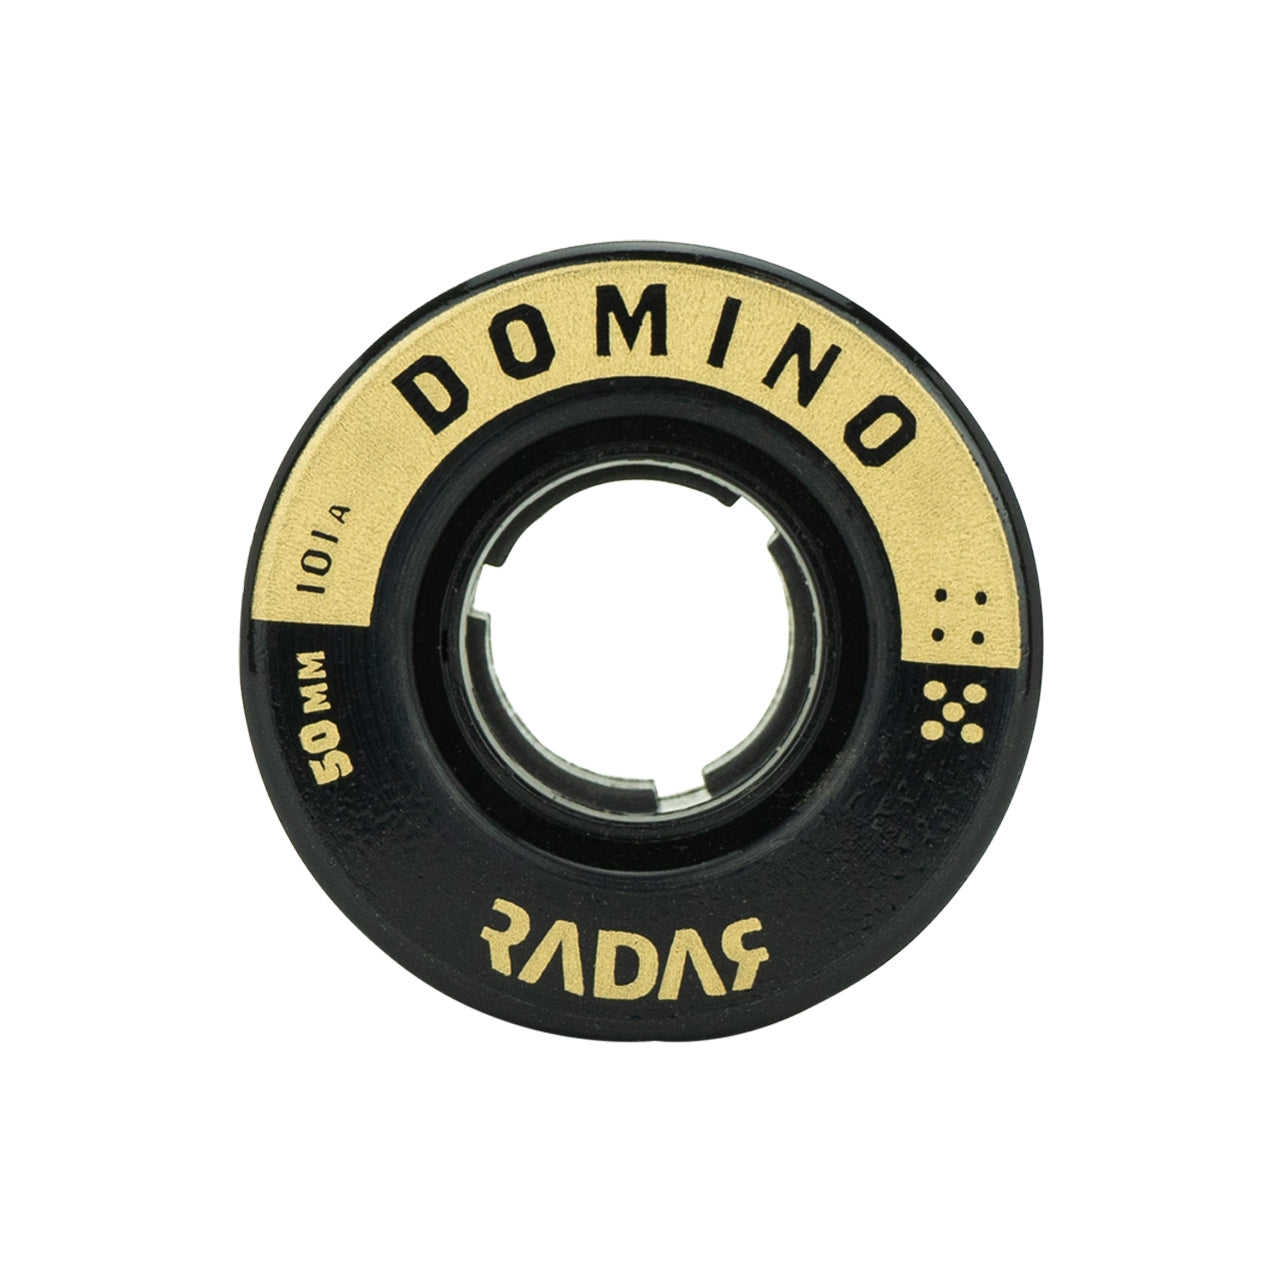 Ruedas Radar Domino Negras/Oro 50mm 101a - Juego de 4